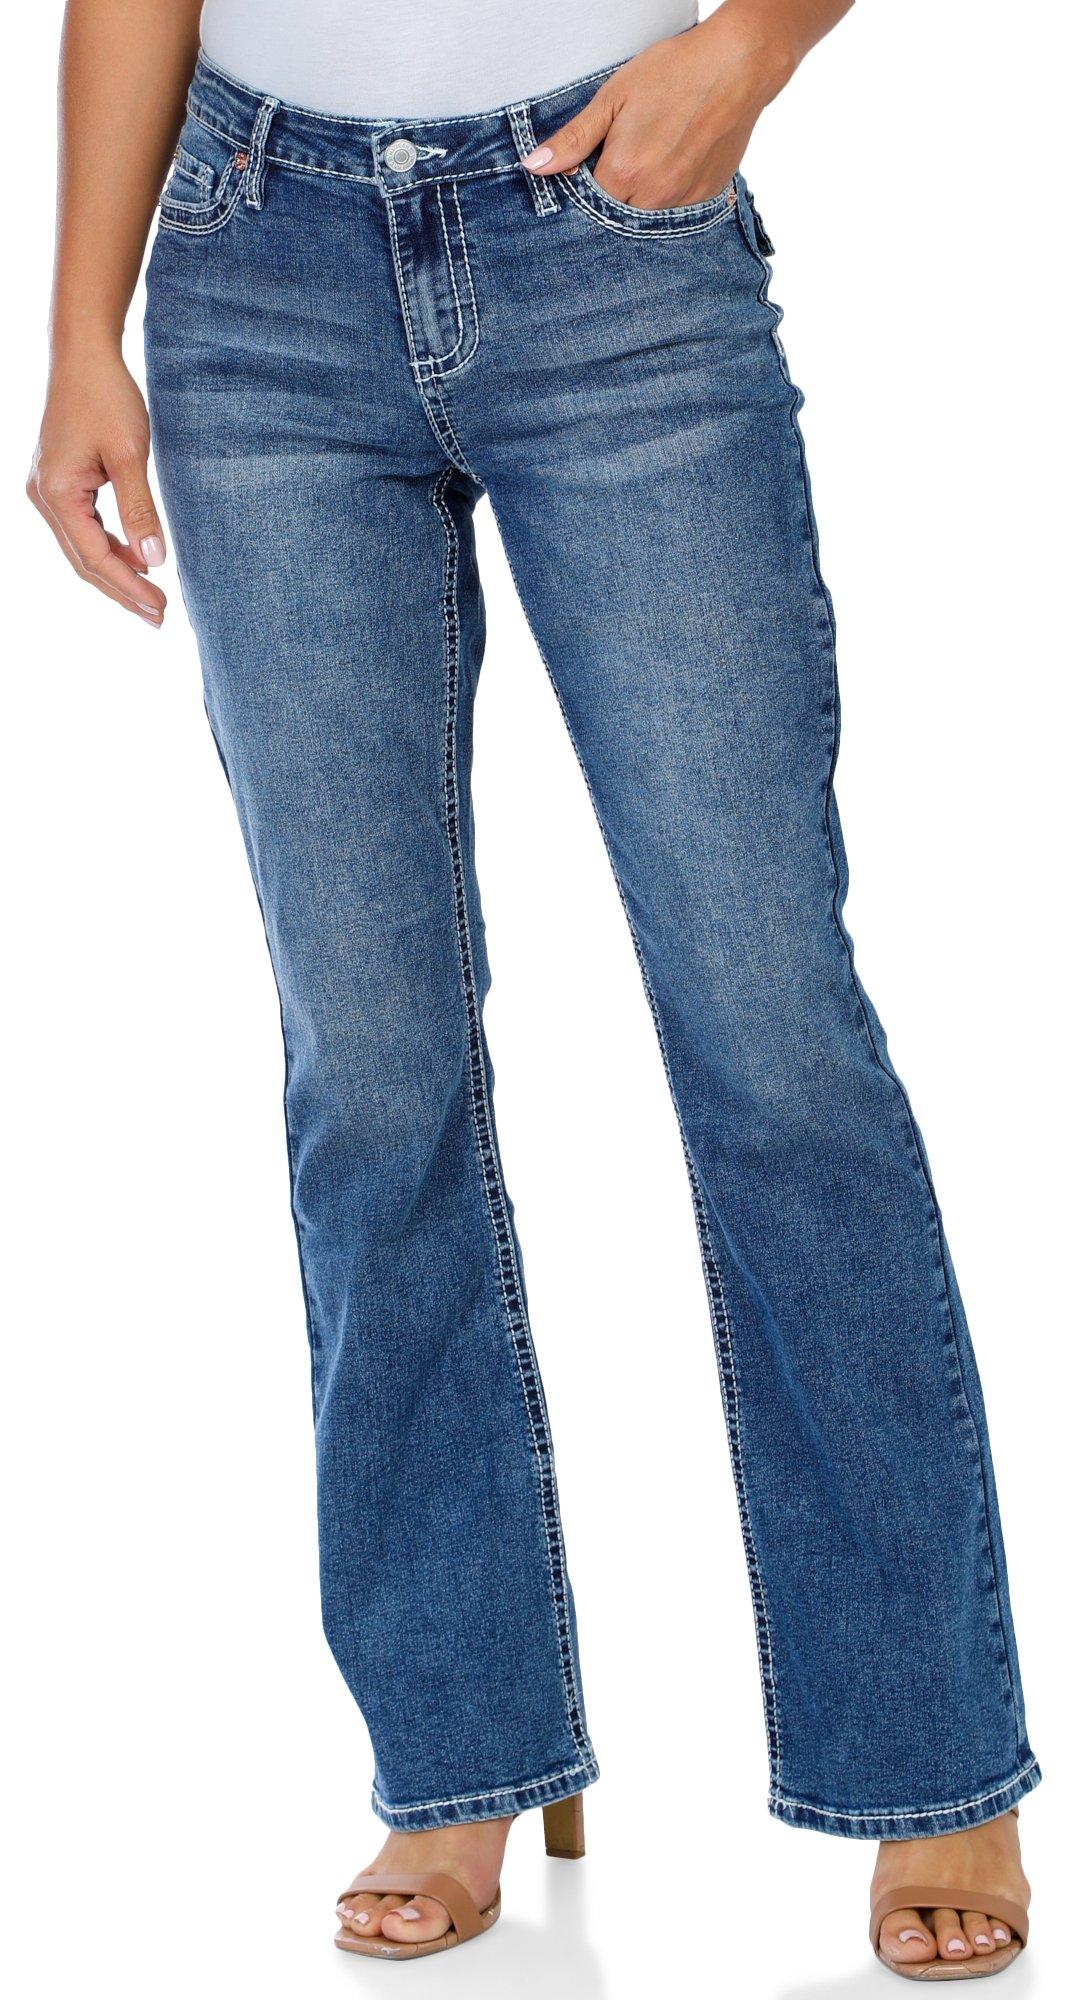 Juniors Boot Cut Jeans